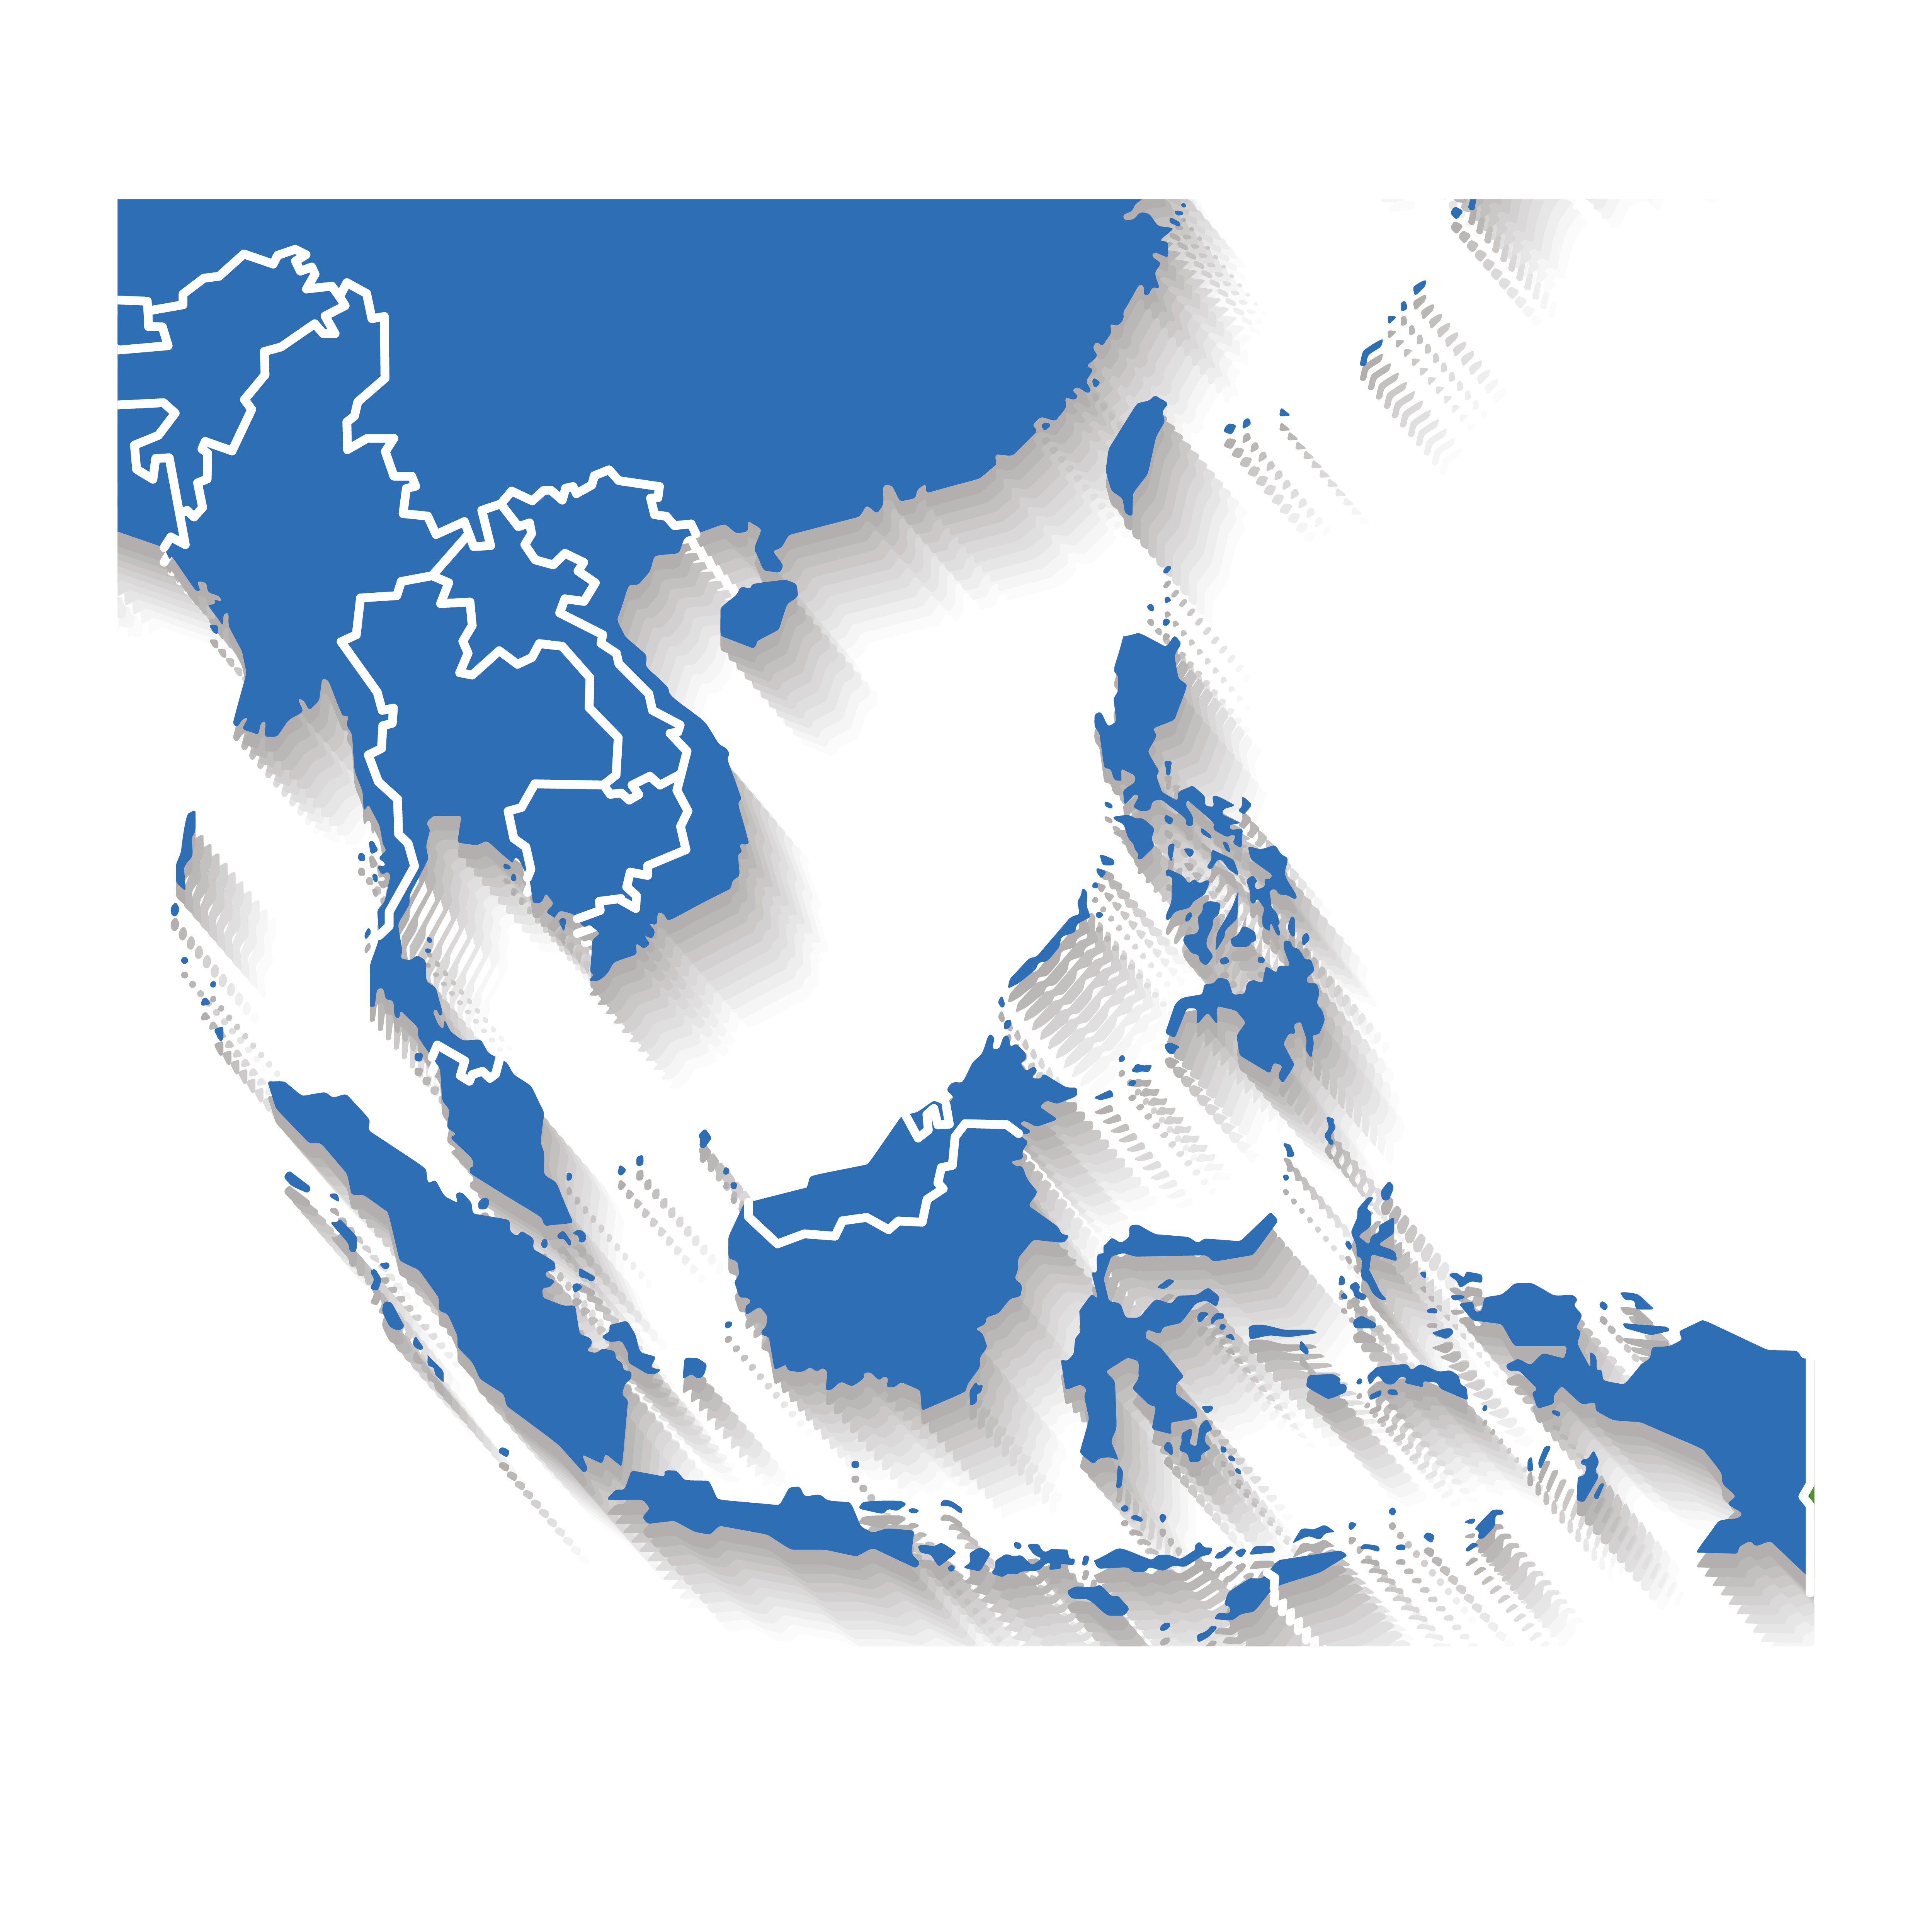 Map of ASEAN region